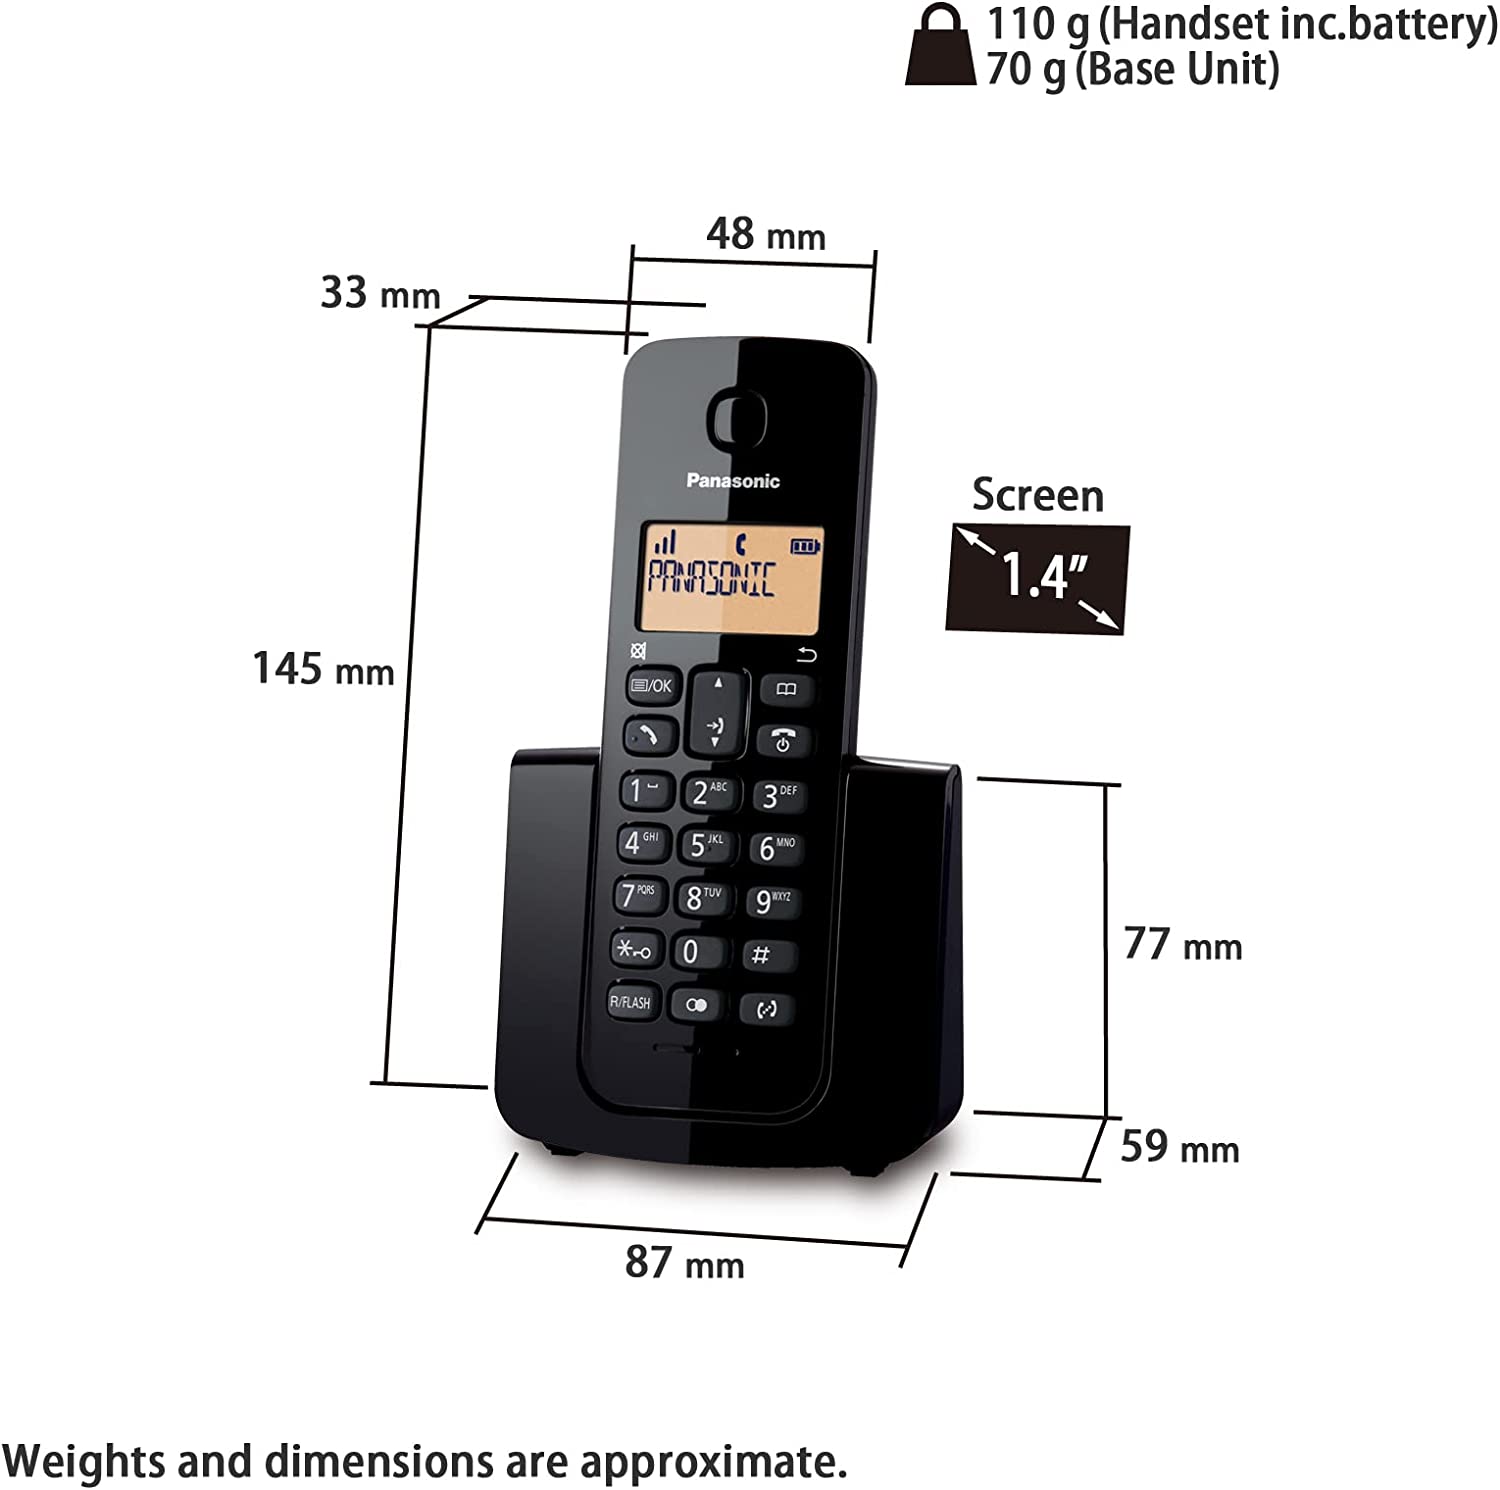 Panasonic Digital Cordless Phone with Caller ID Single Handset, Black - KX-TGB110UE1